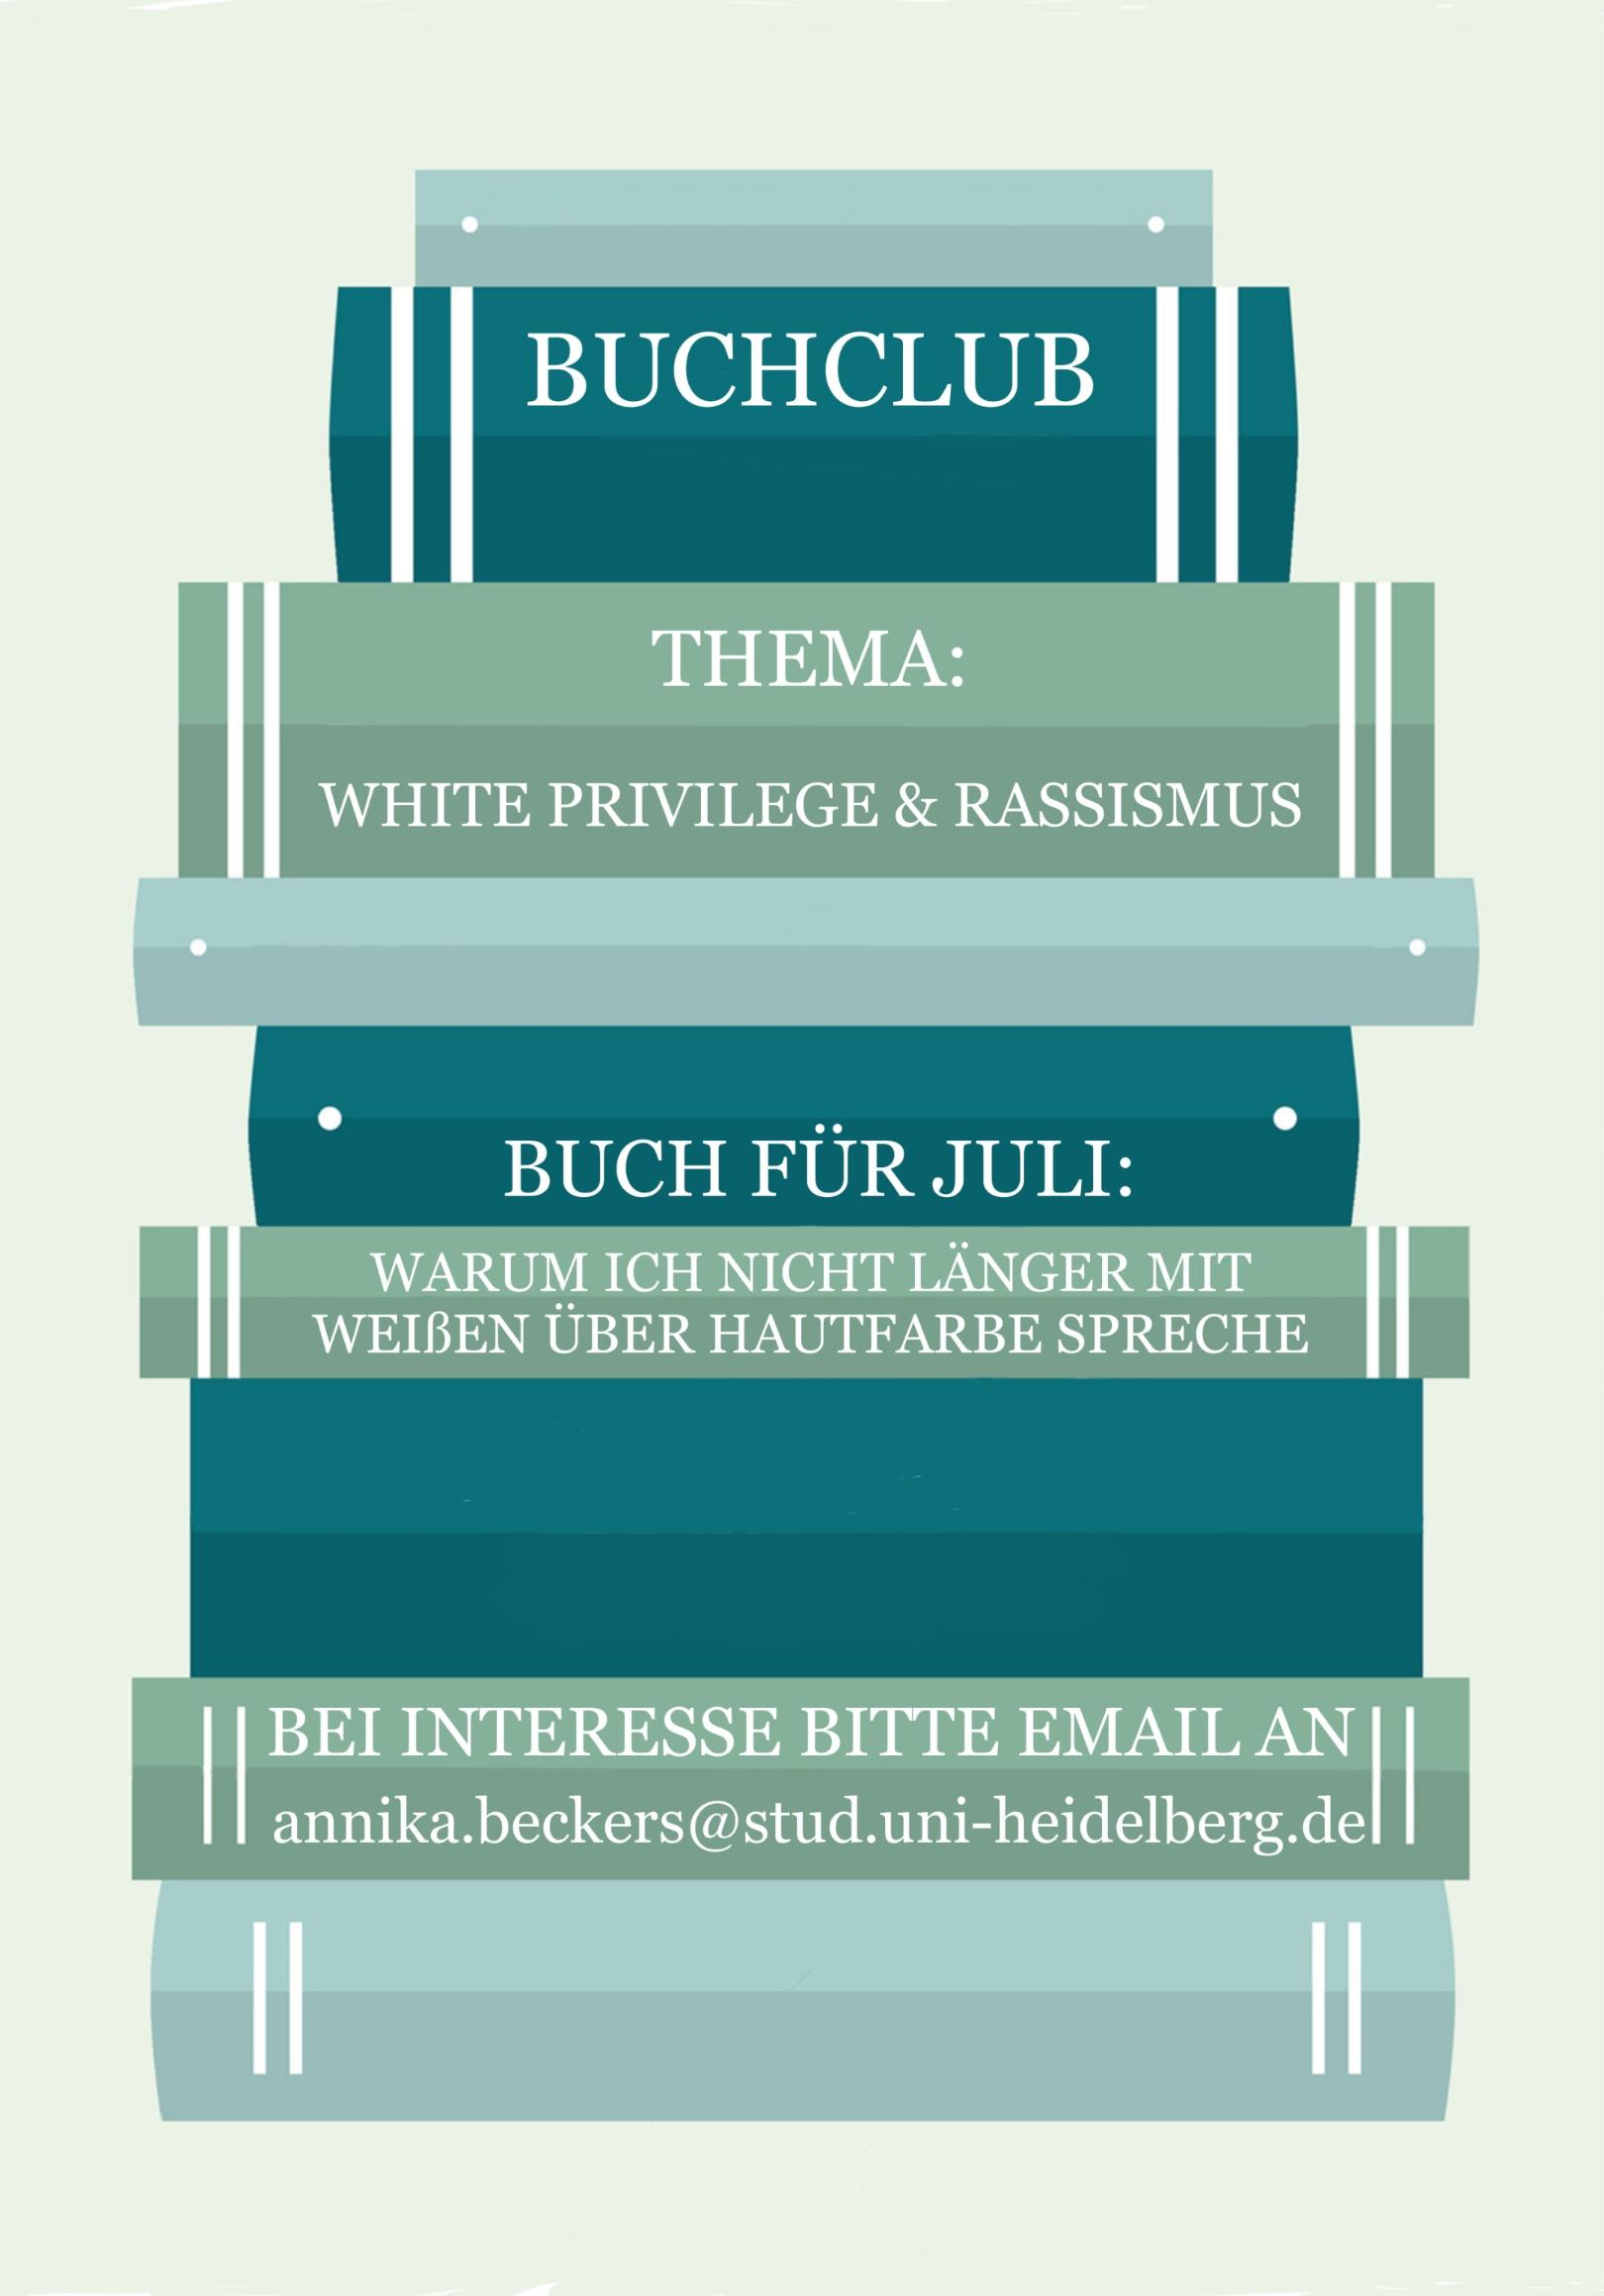 Buchclub_Poster_Privilege-1 (c) Annika Beckers